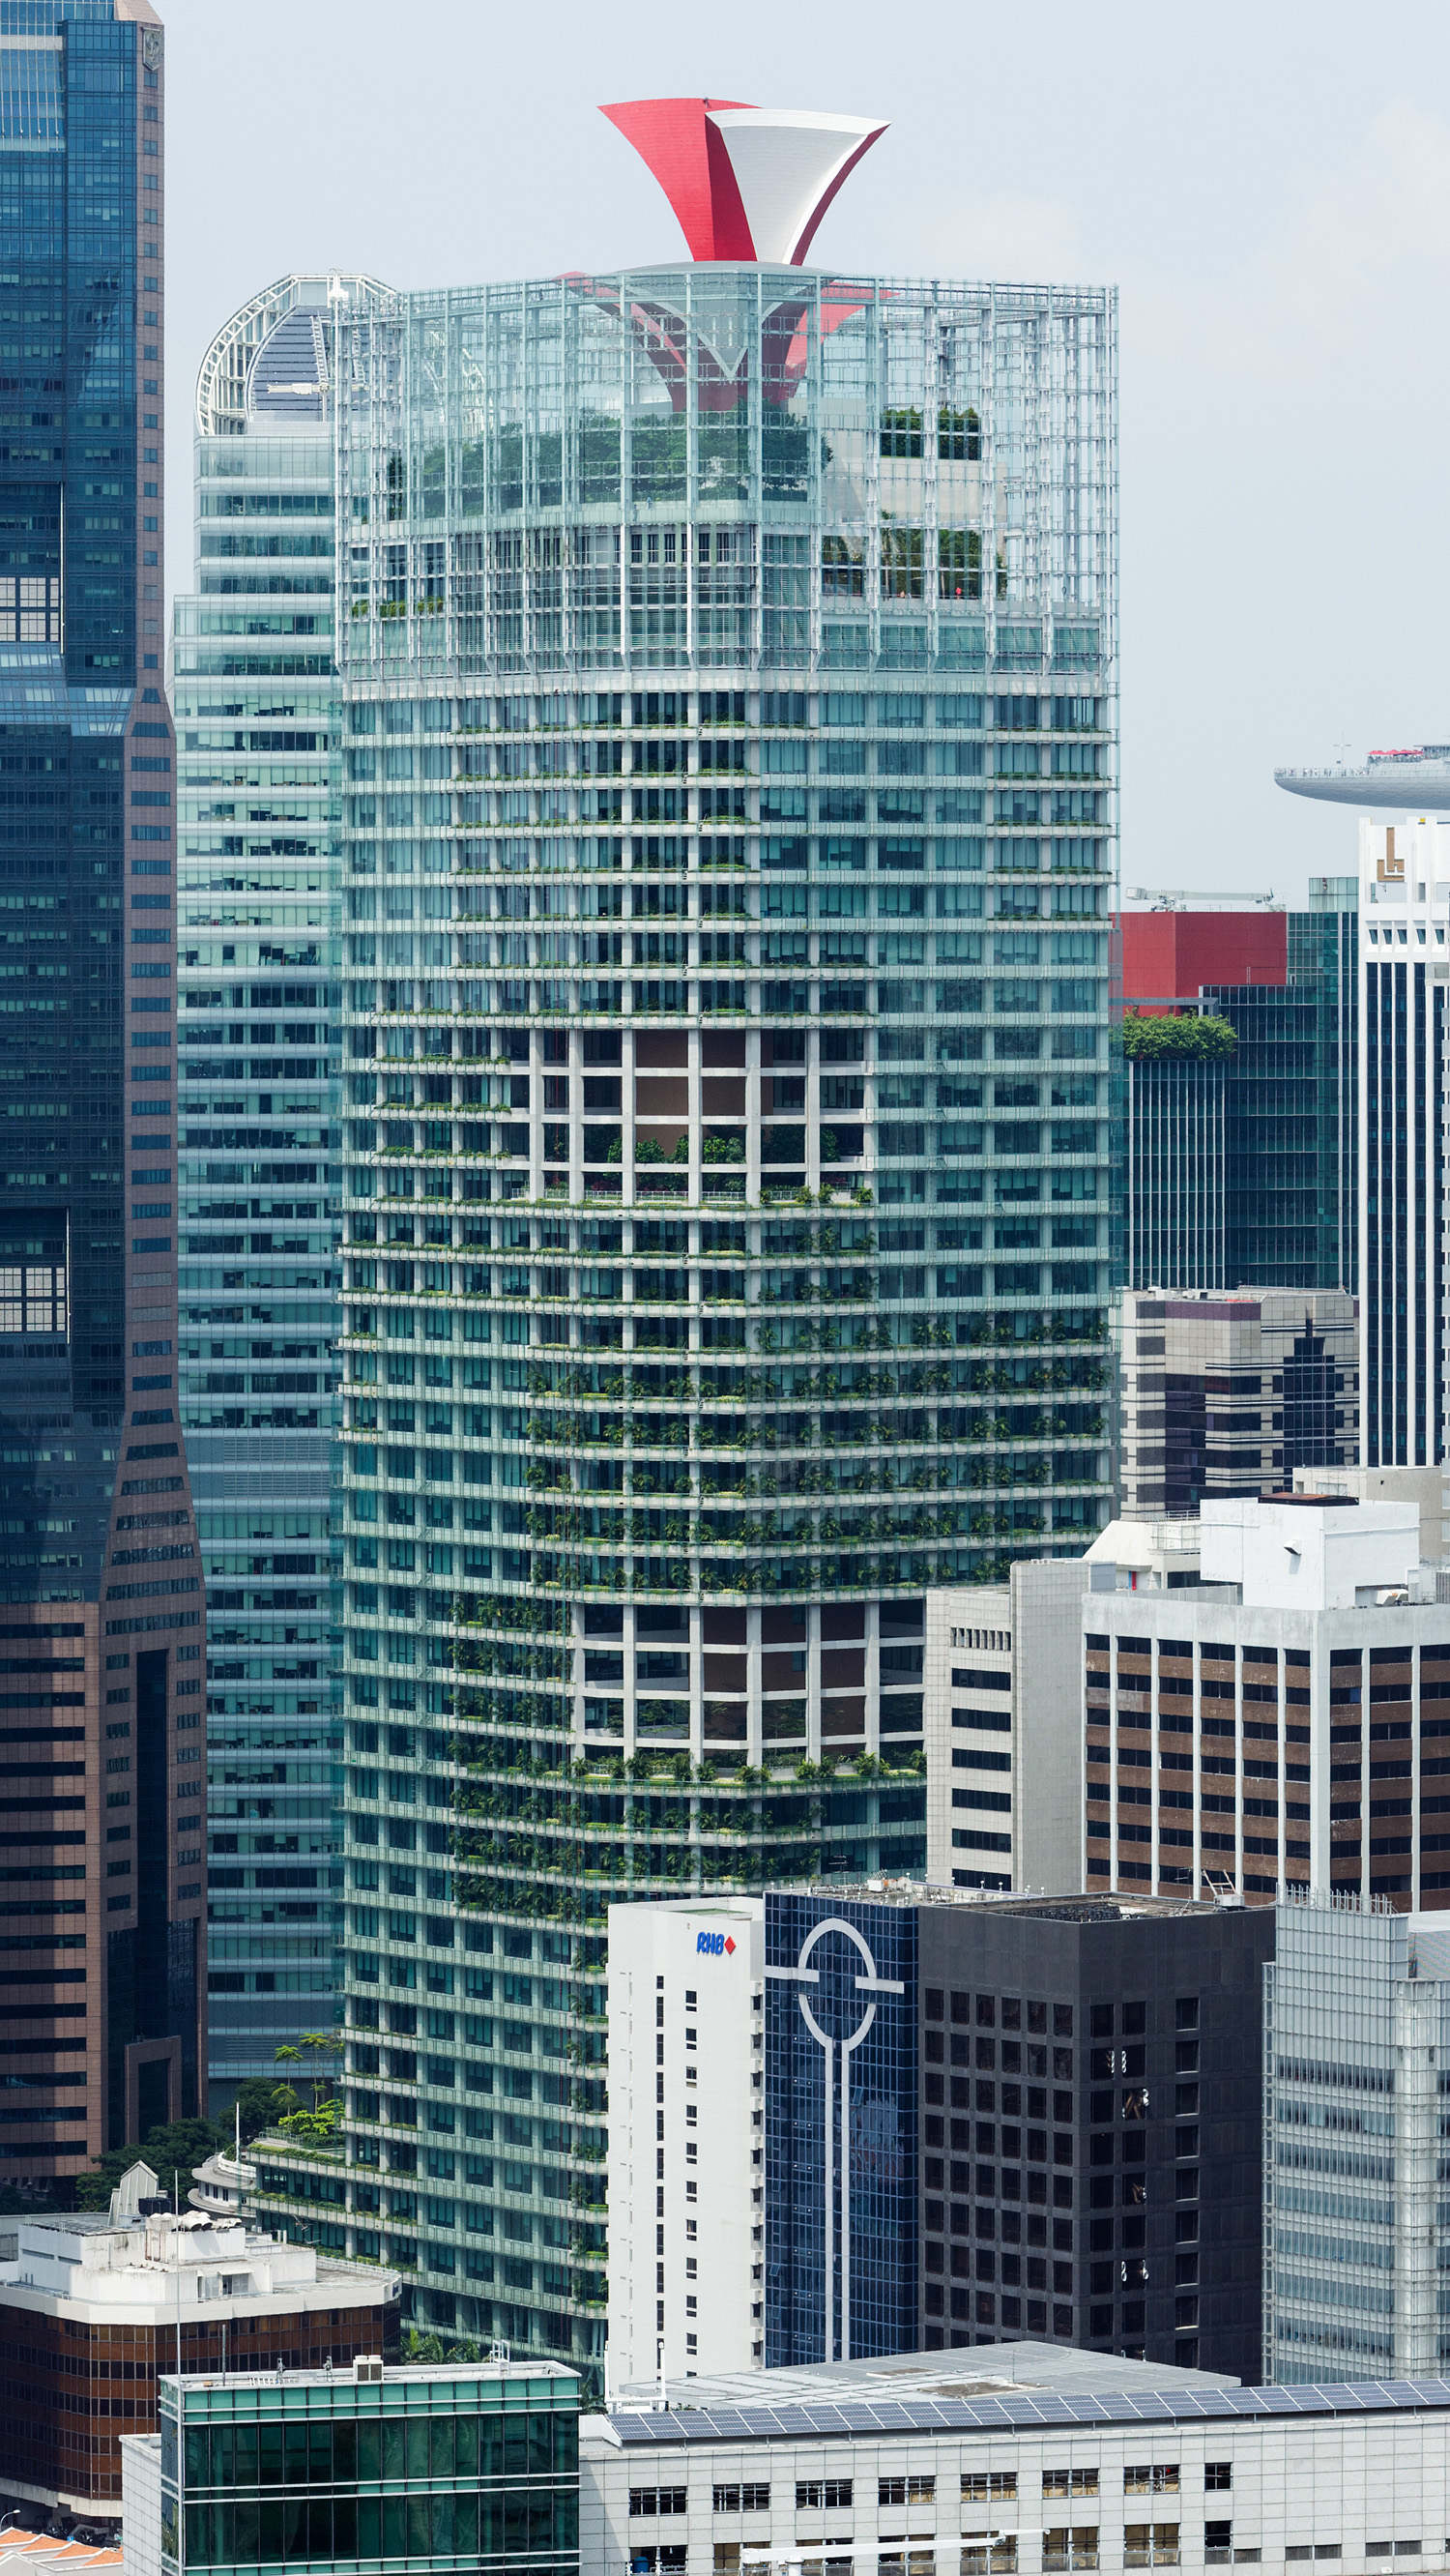 CapitaGreen, Singapore - View from Pinnacle@Duxton. © Mathias Beinling